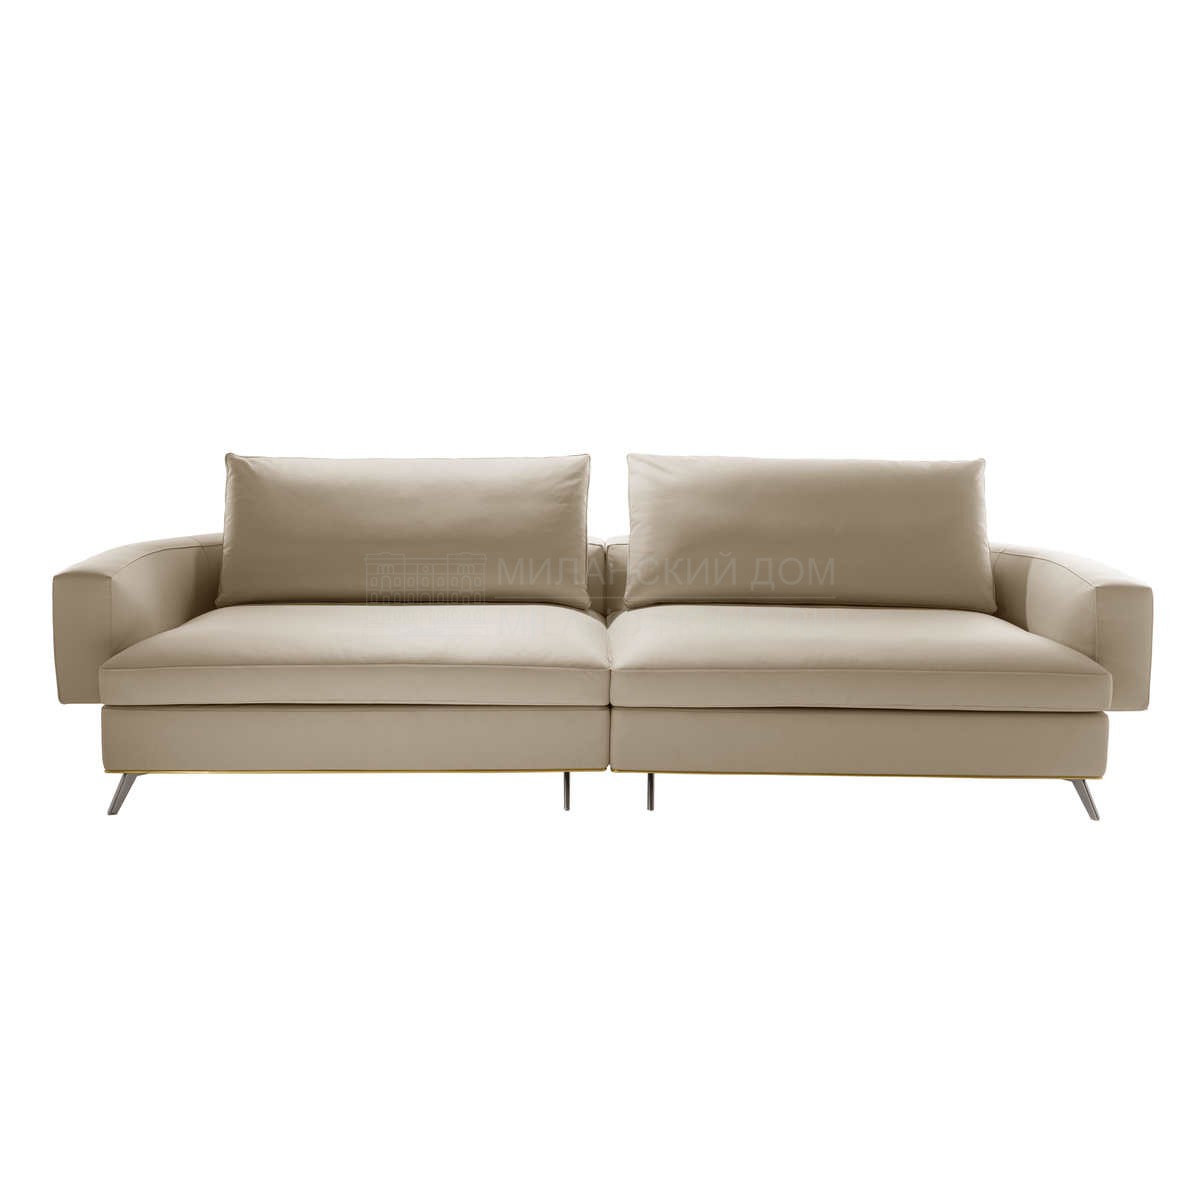 Кожаный диван Rhapsody sofa из Италии фабрики IPE CAVALLI VISIONNAIRE